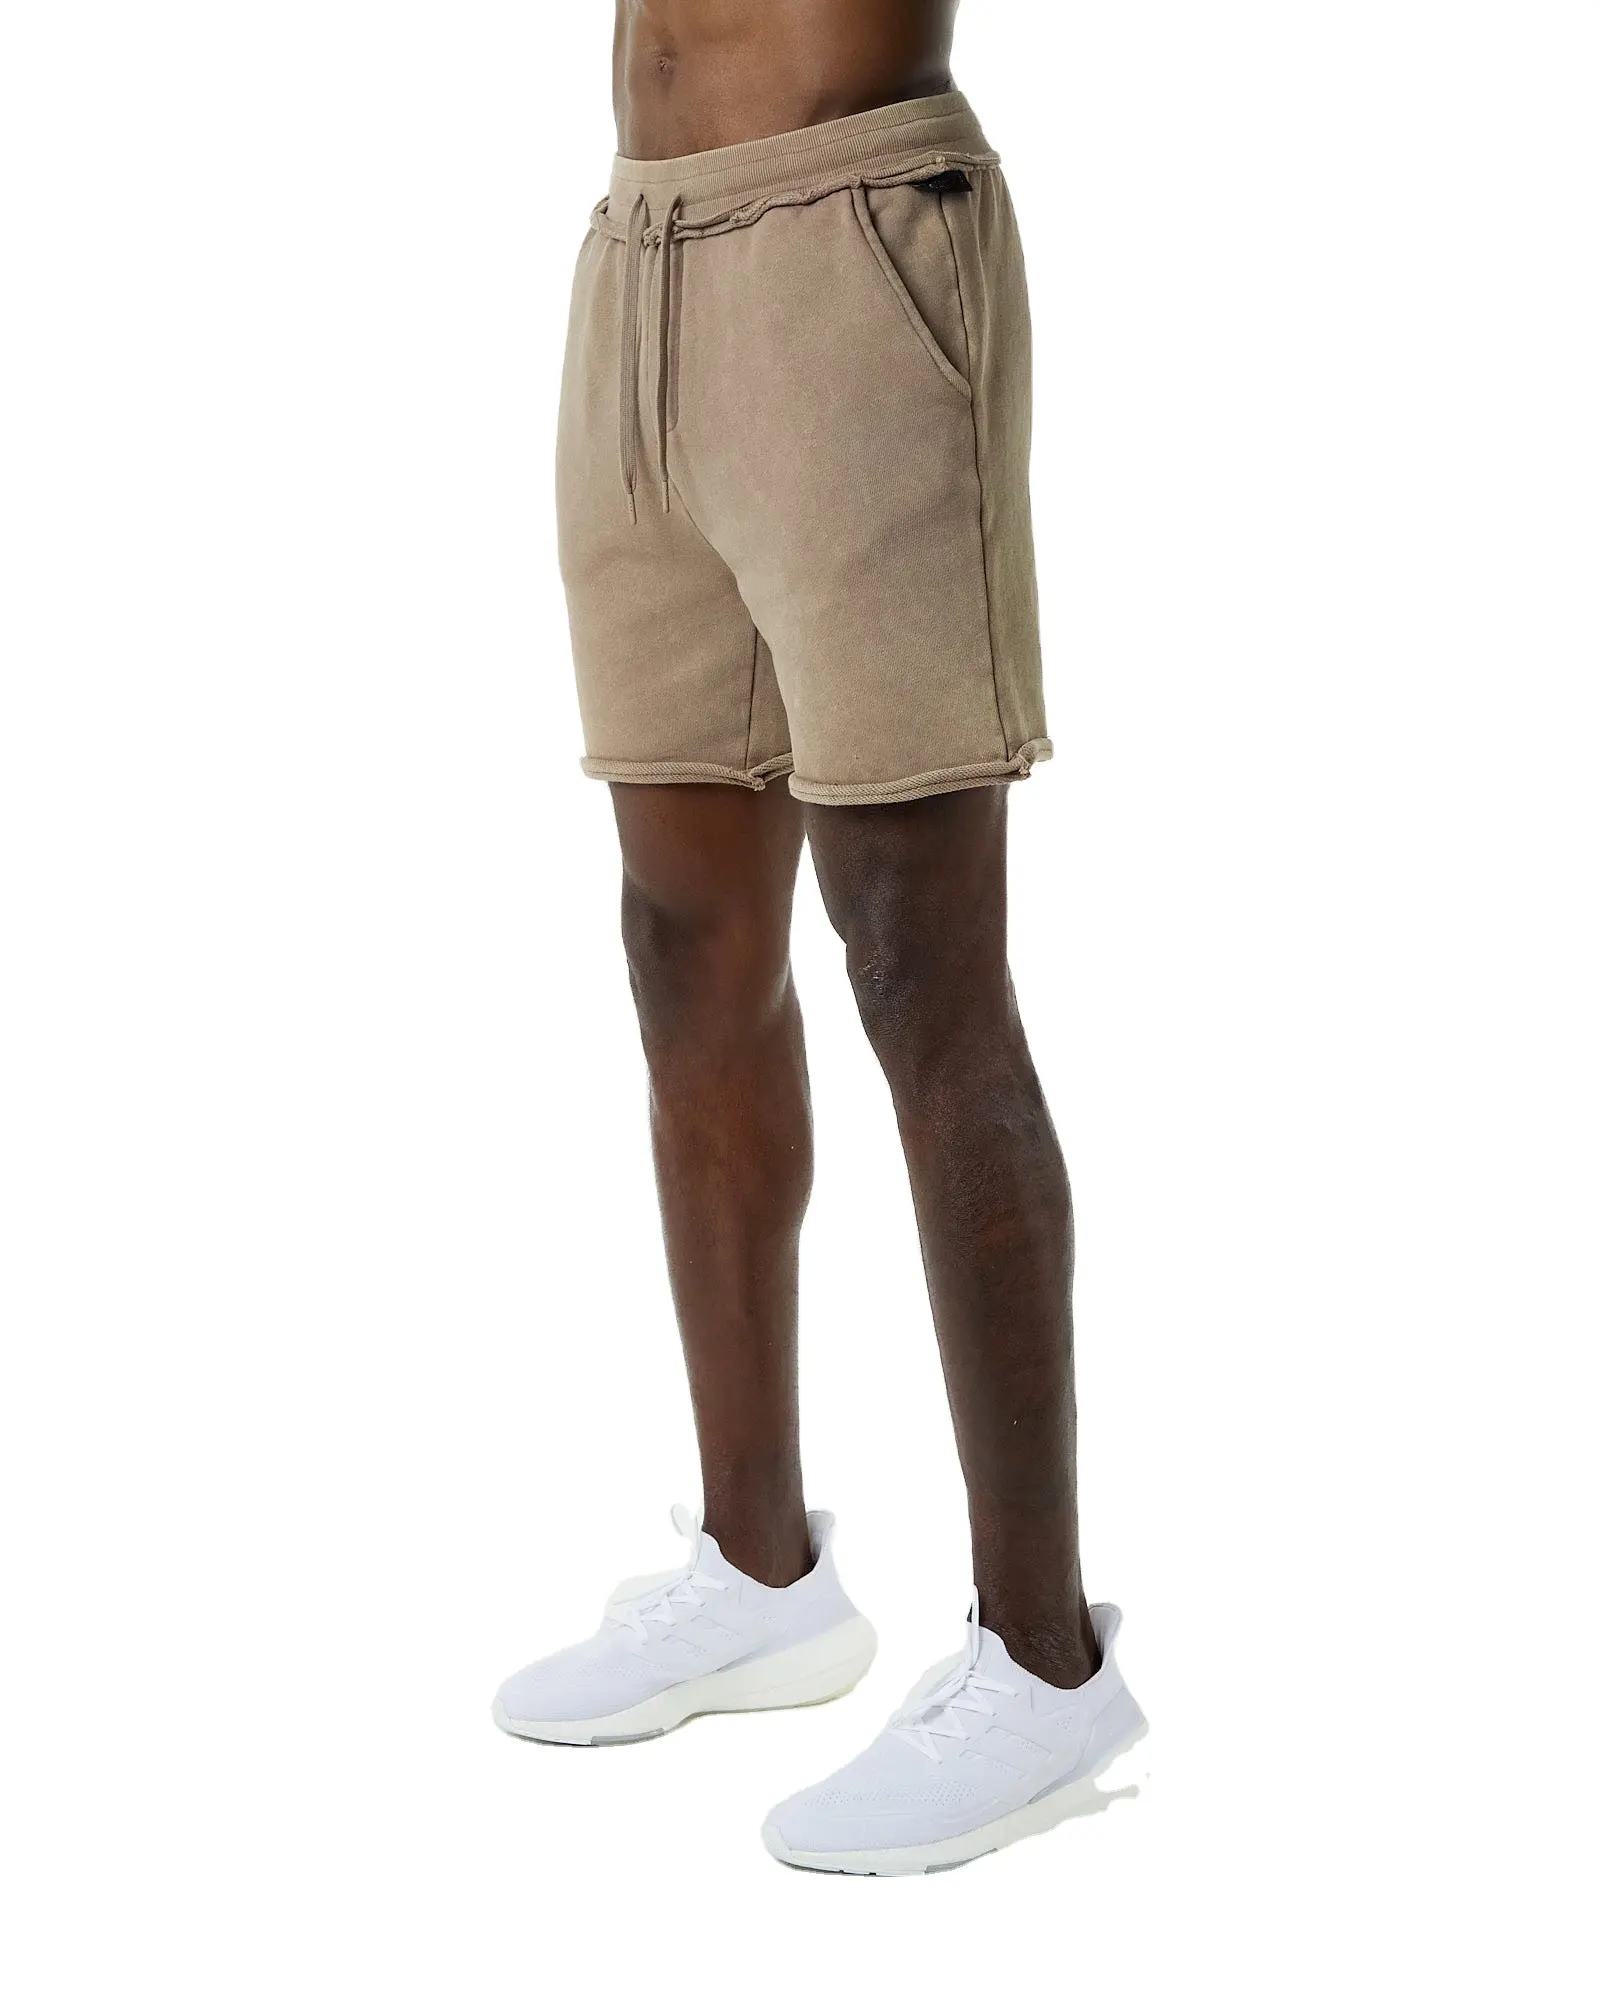 Wholesale custom quality cotton distressed shorts black vintage acid washed sun faded shorts for men